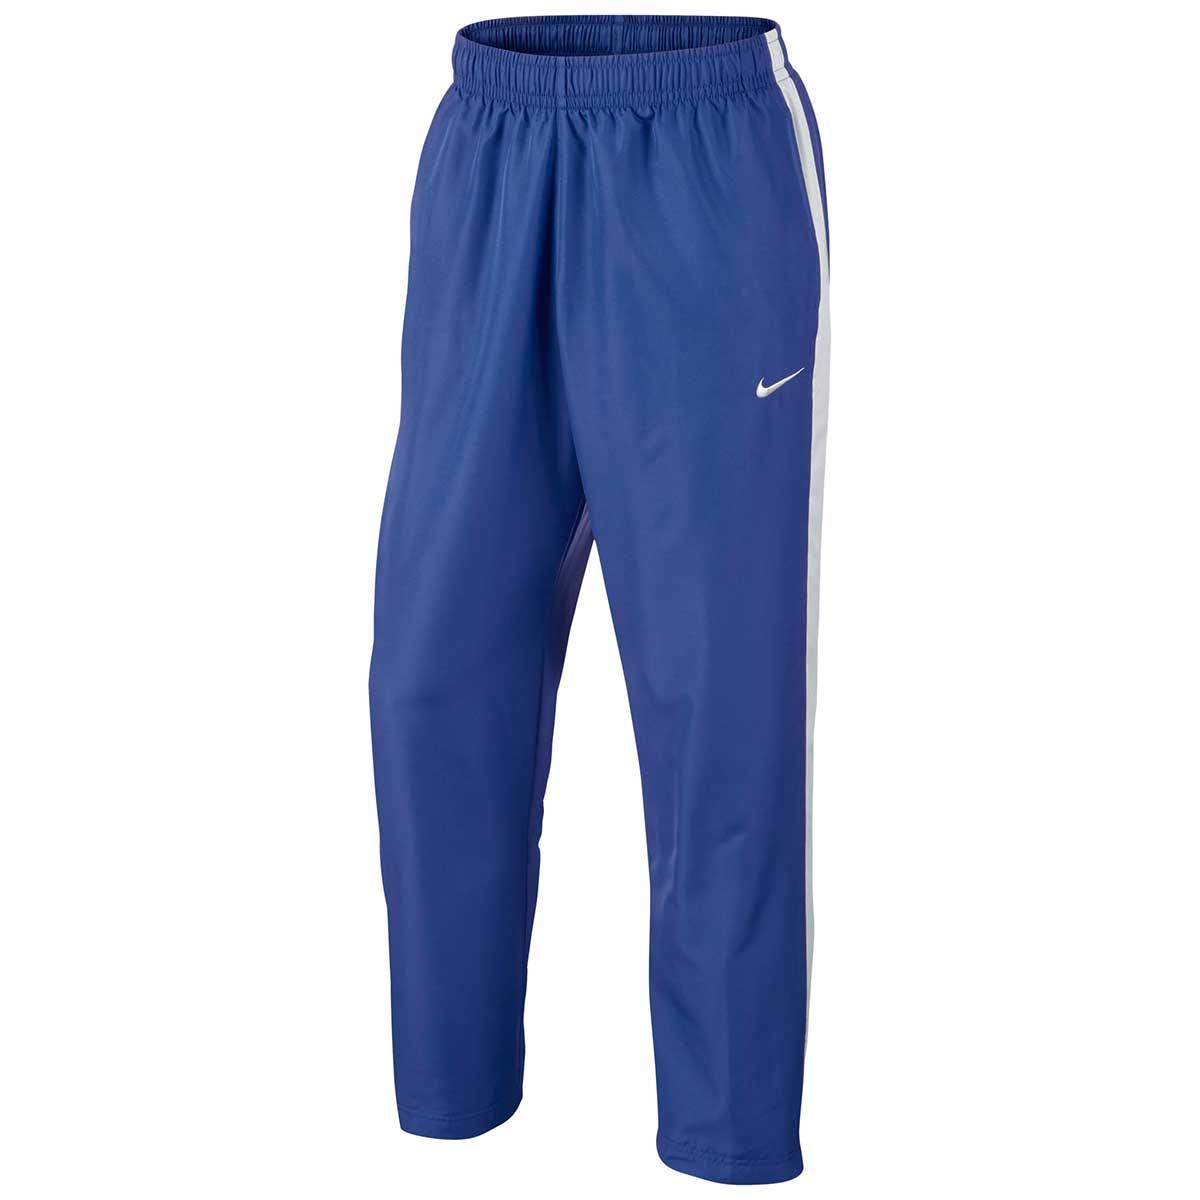 Nike blue and navy workout shorts large - Depop